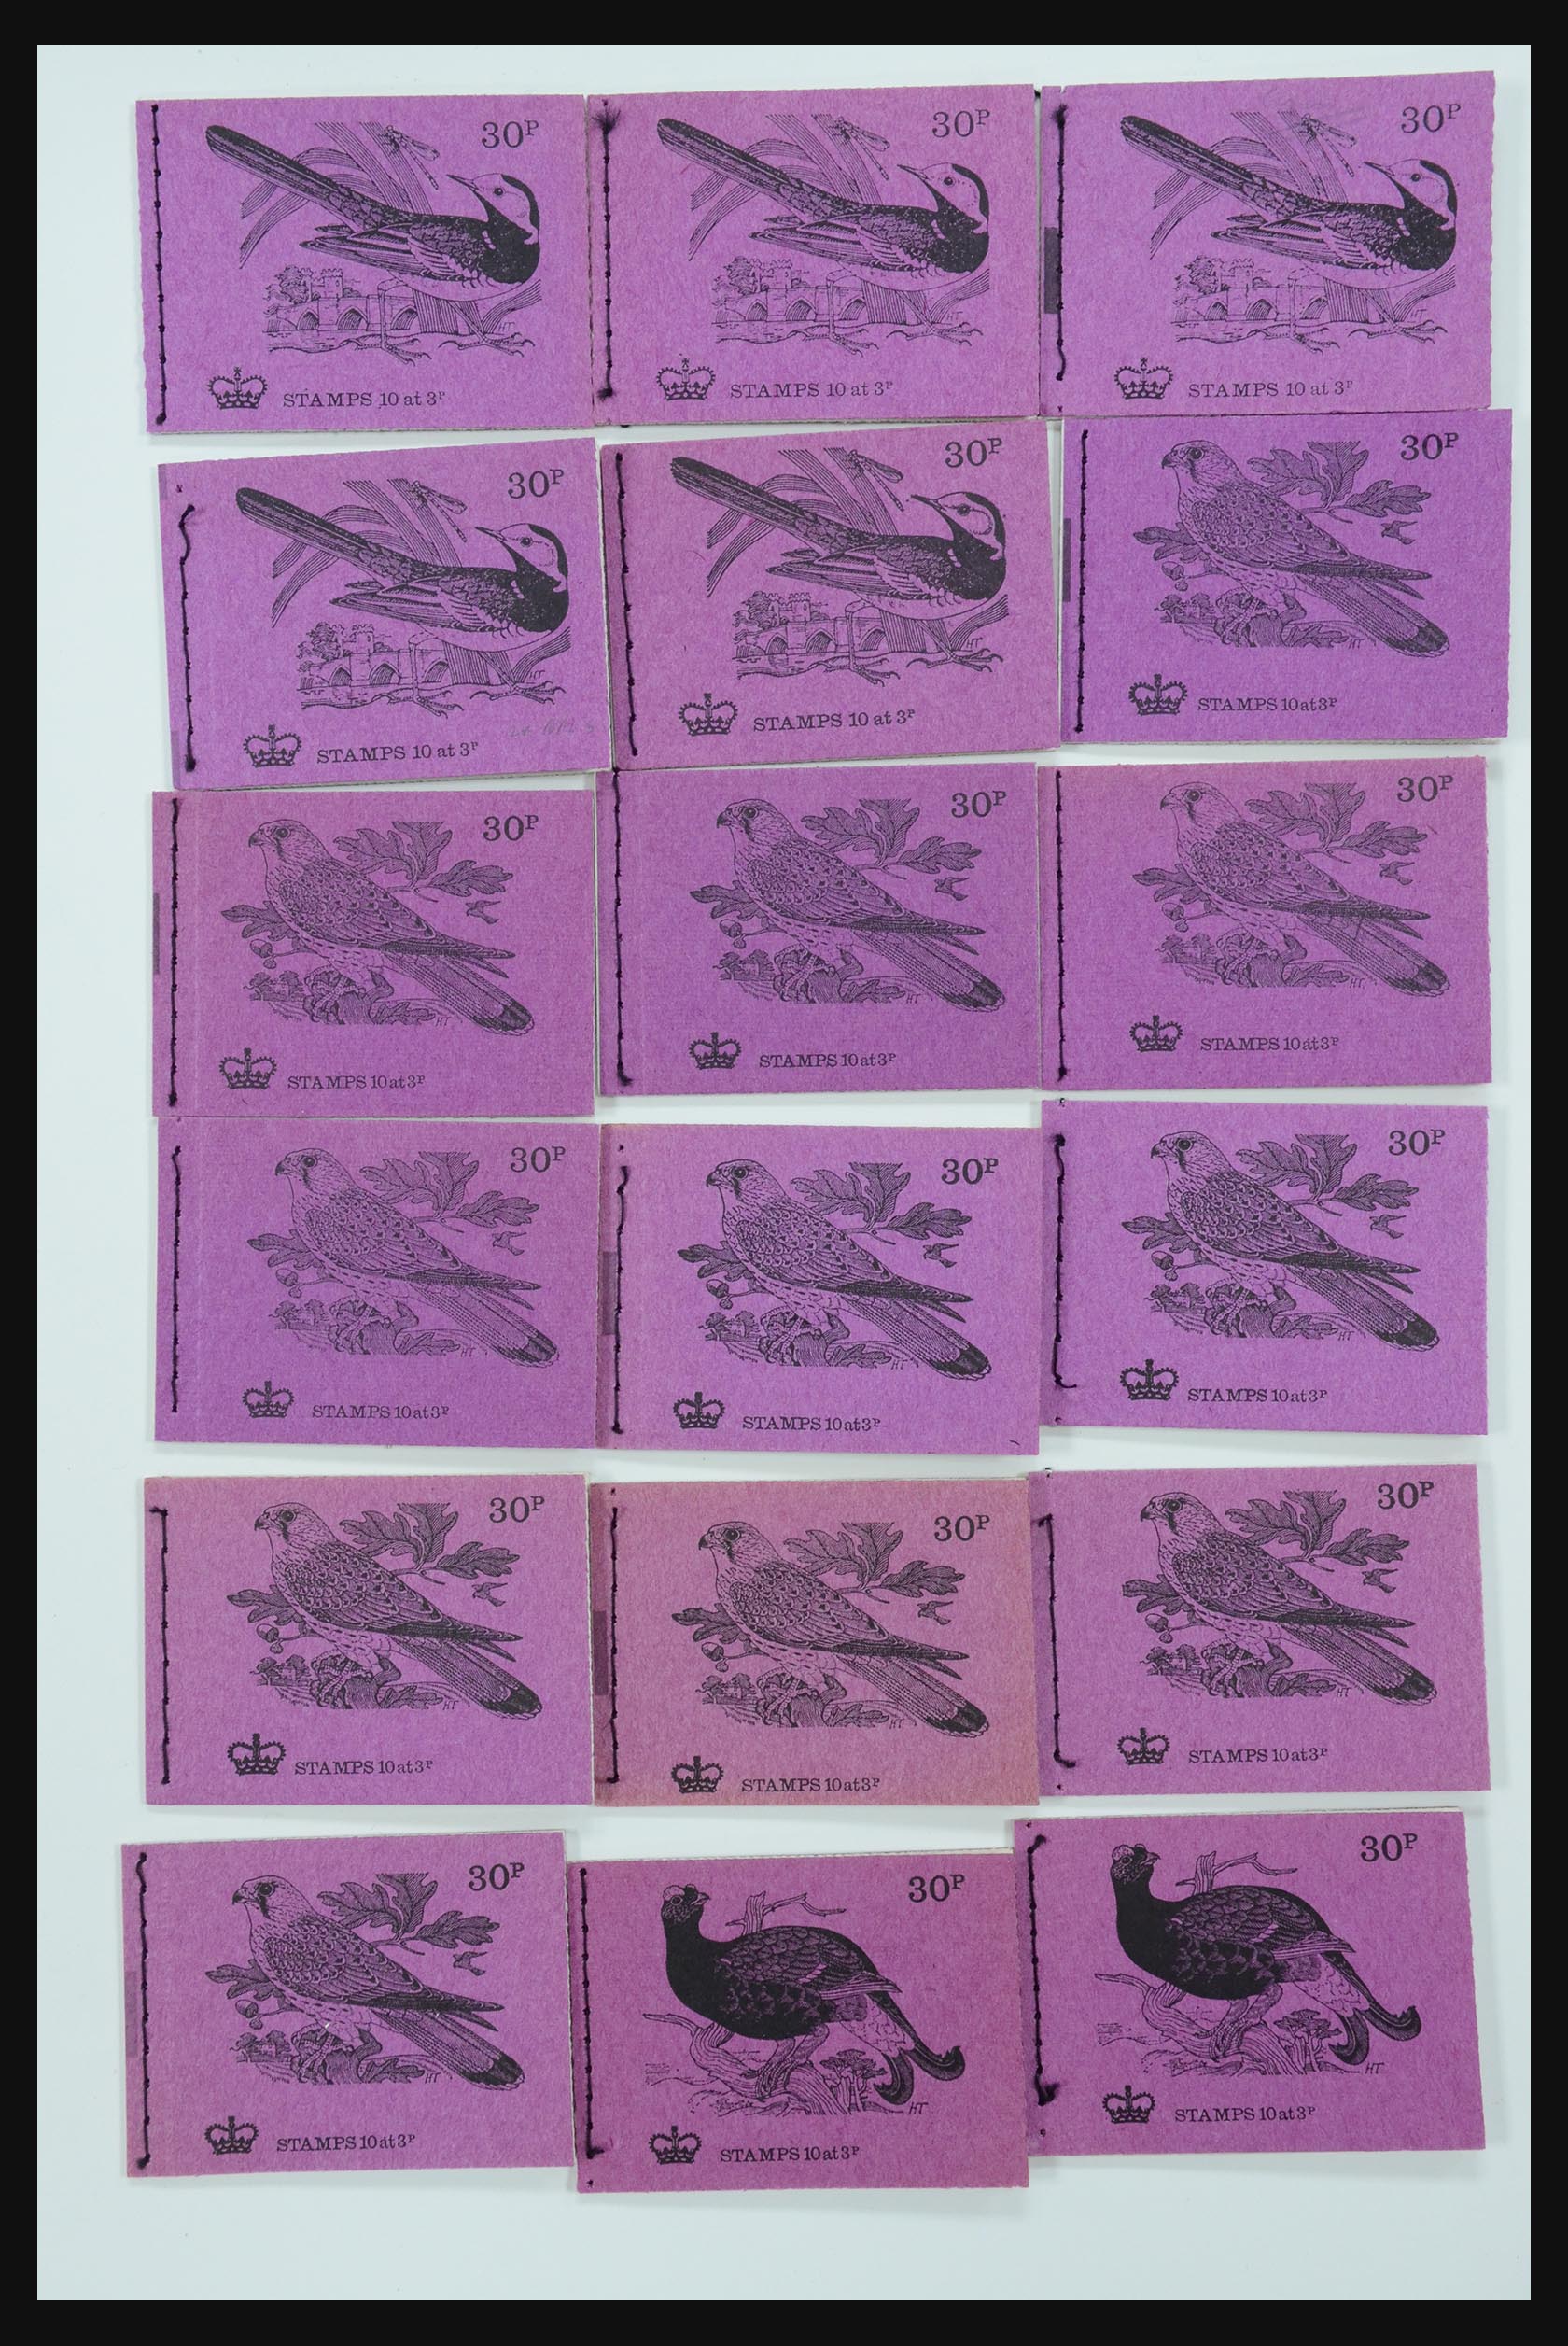 31961 015 - 31961 Great Britain stampbooklets 1971-1999.